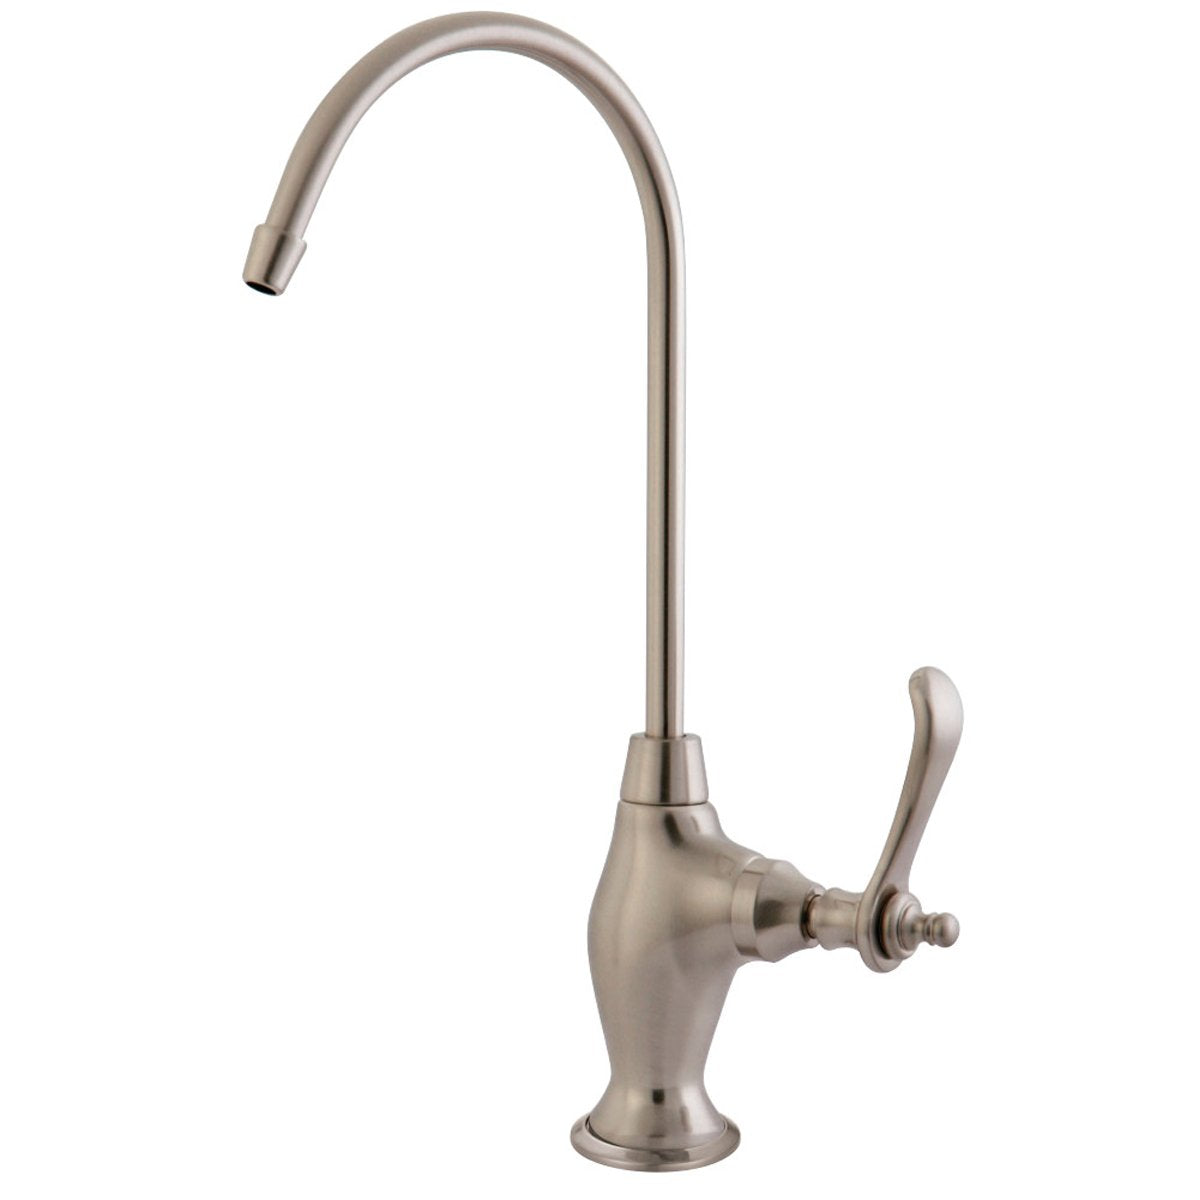 Kingston Brass Templeton Single Handle Water Filtration Faucet